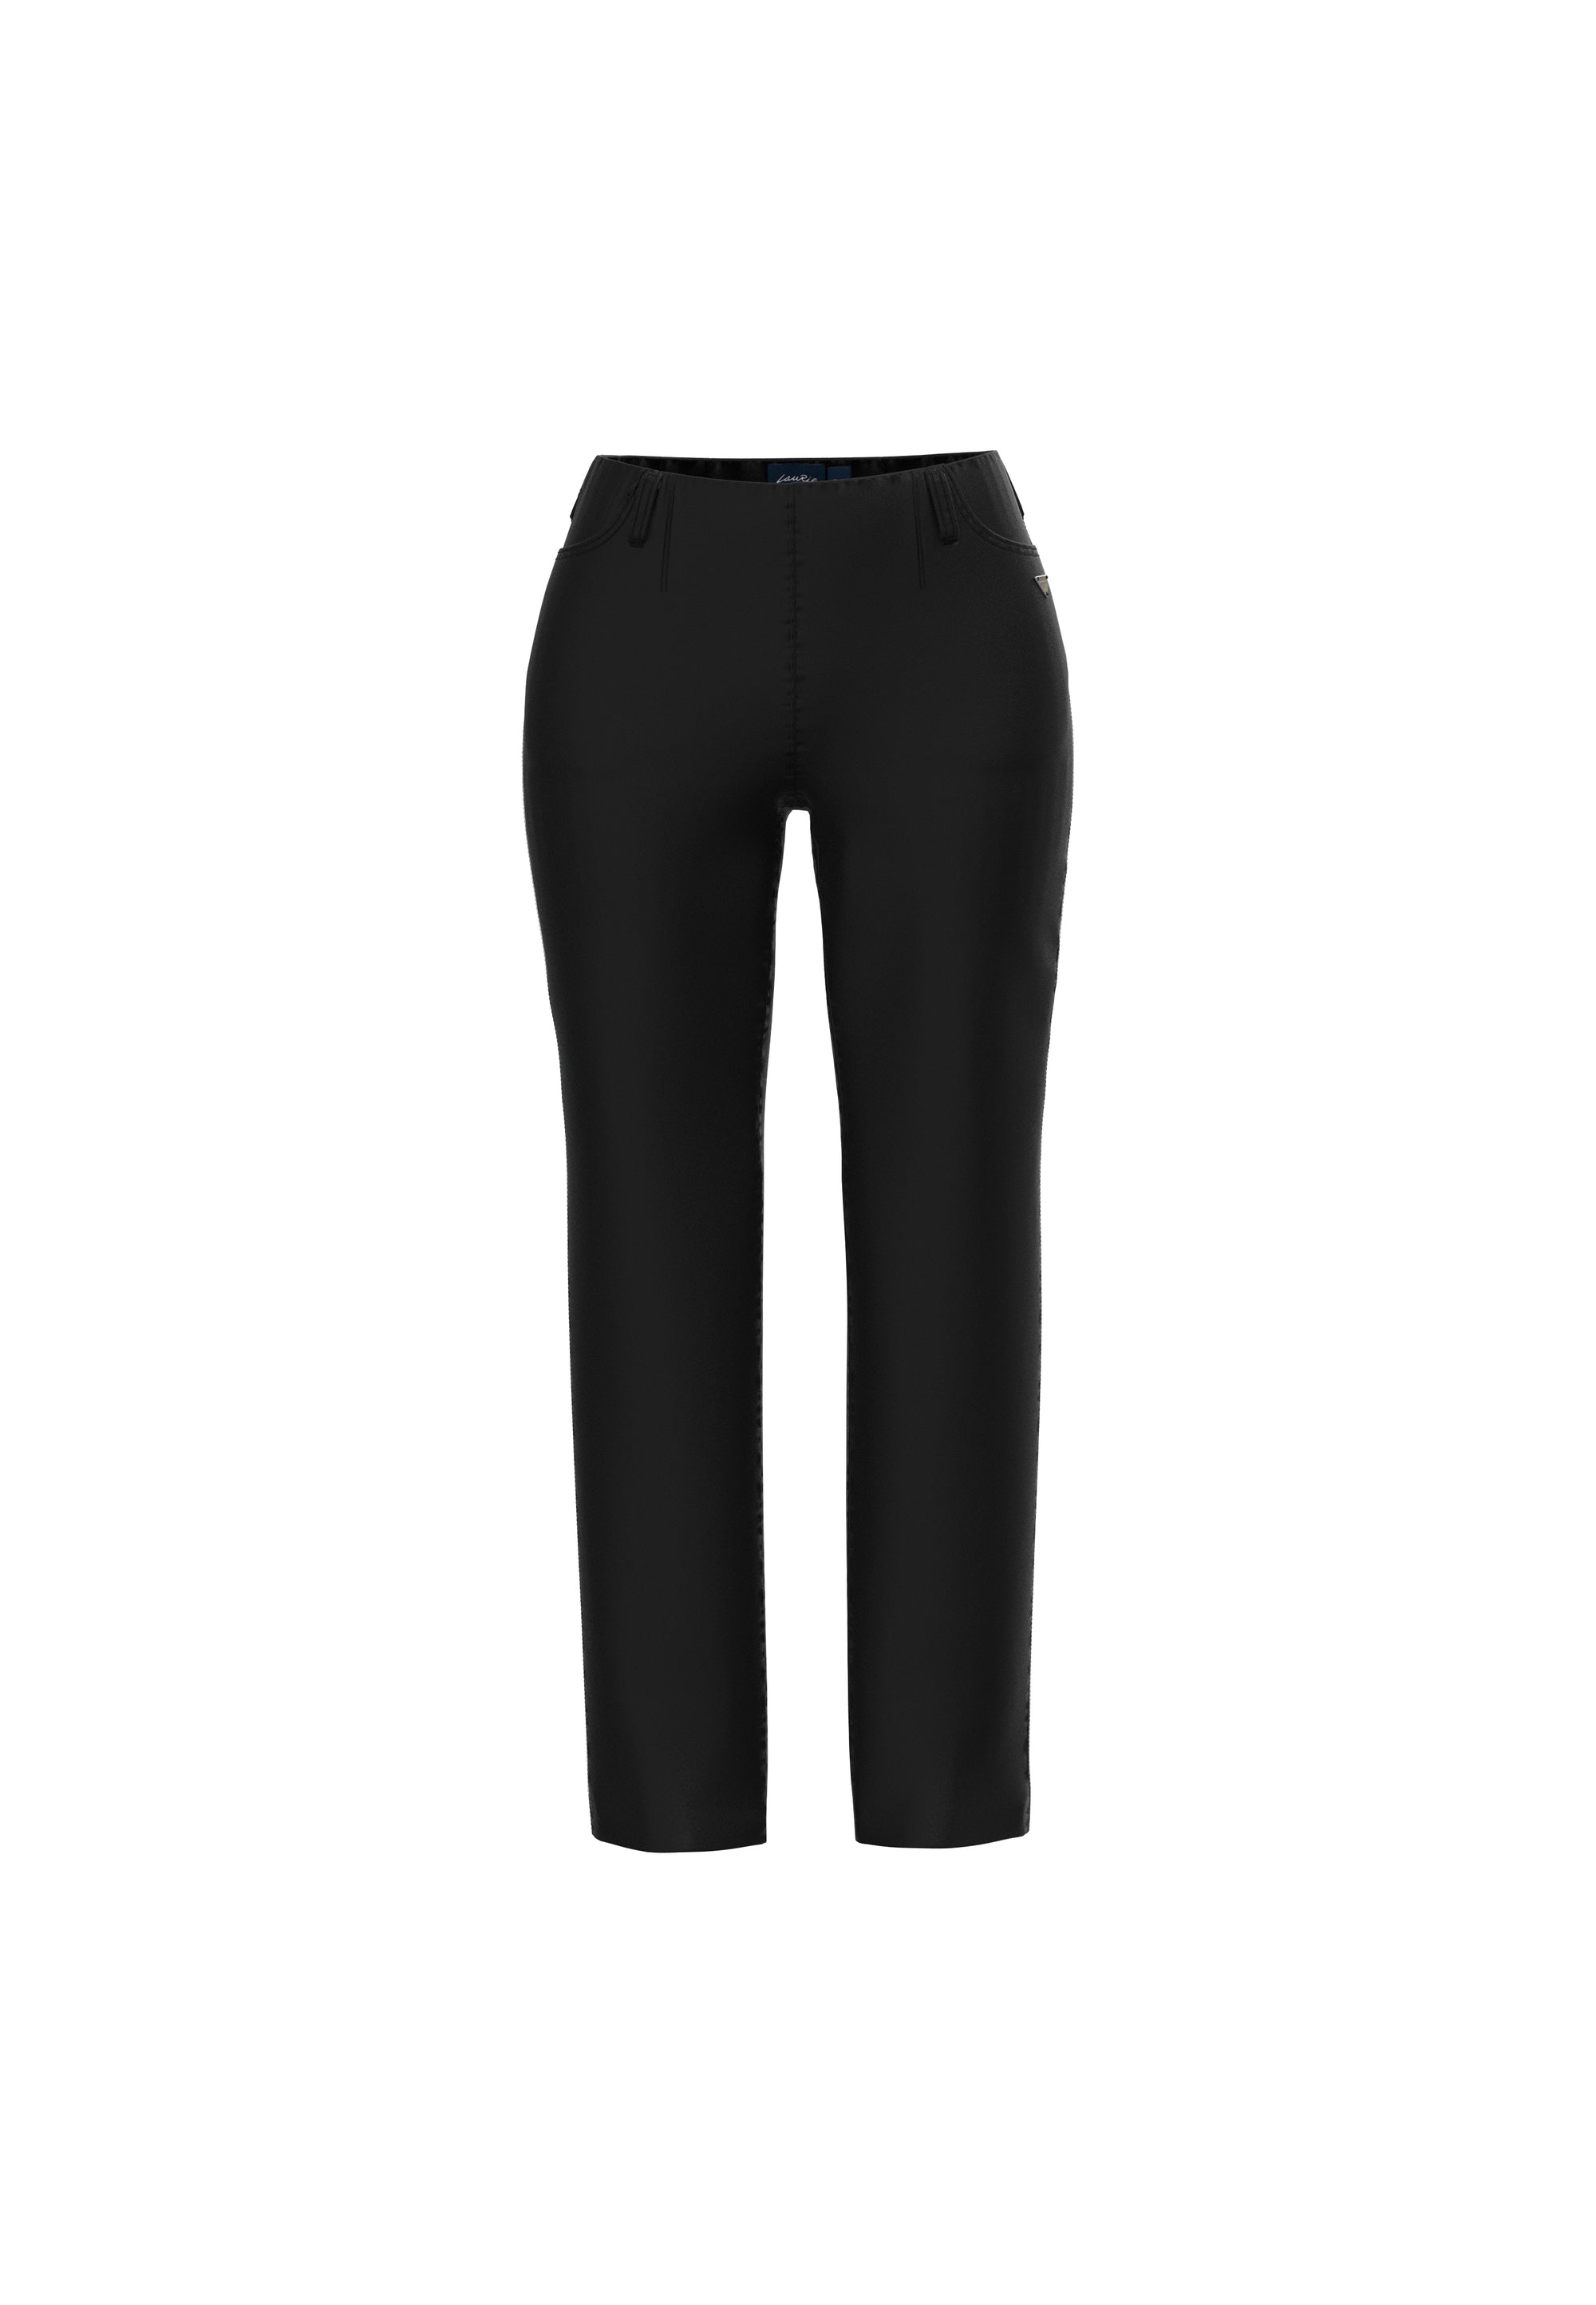 LAURIE Kelly Regular - Medium Length Trousers REGULAR 99971 Black Brushed